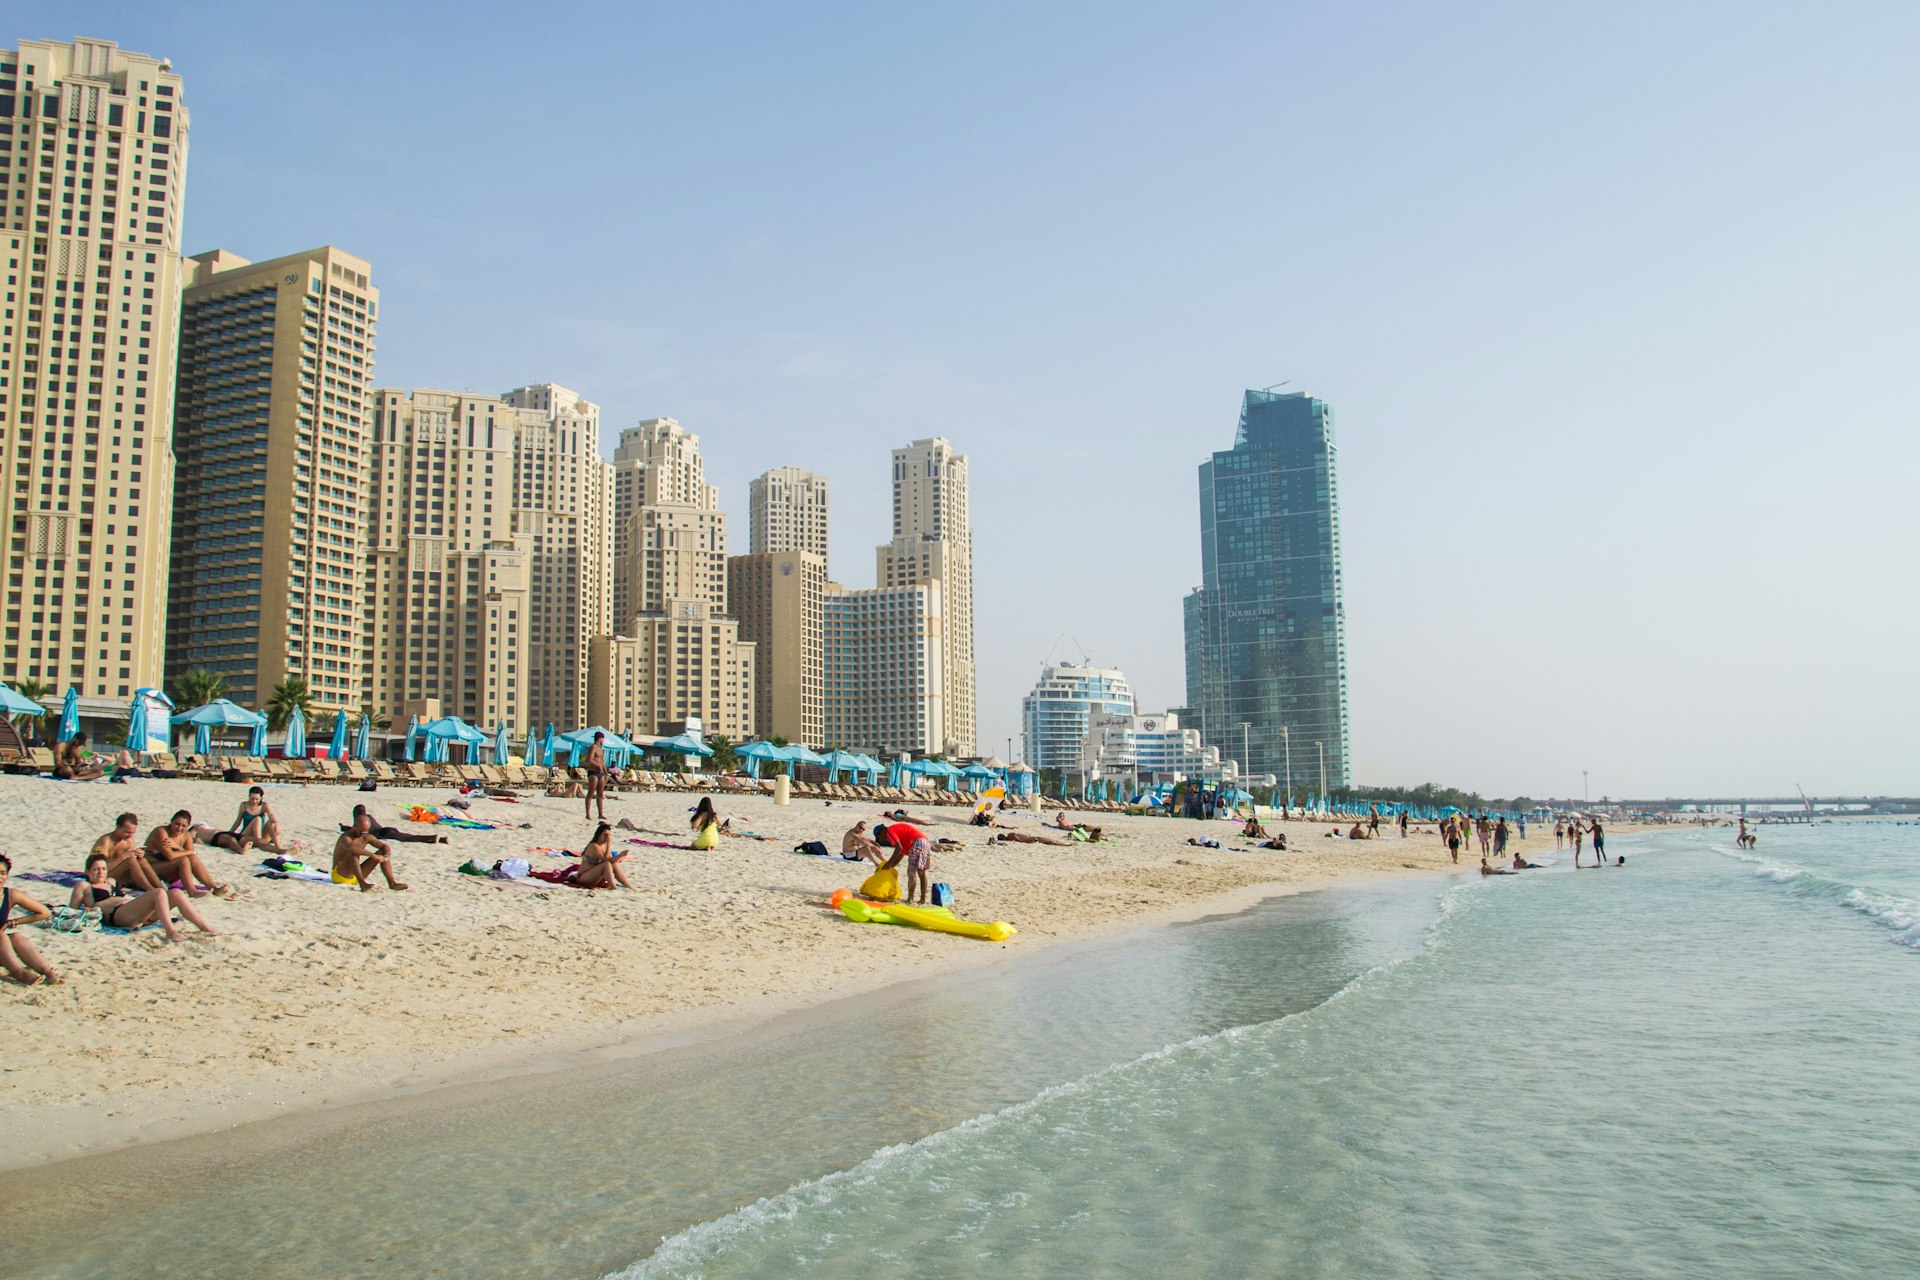 Dubai Marina and JBR beach with sunbathers